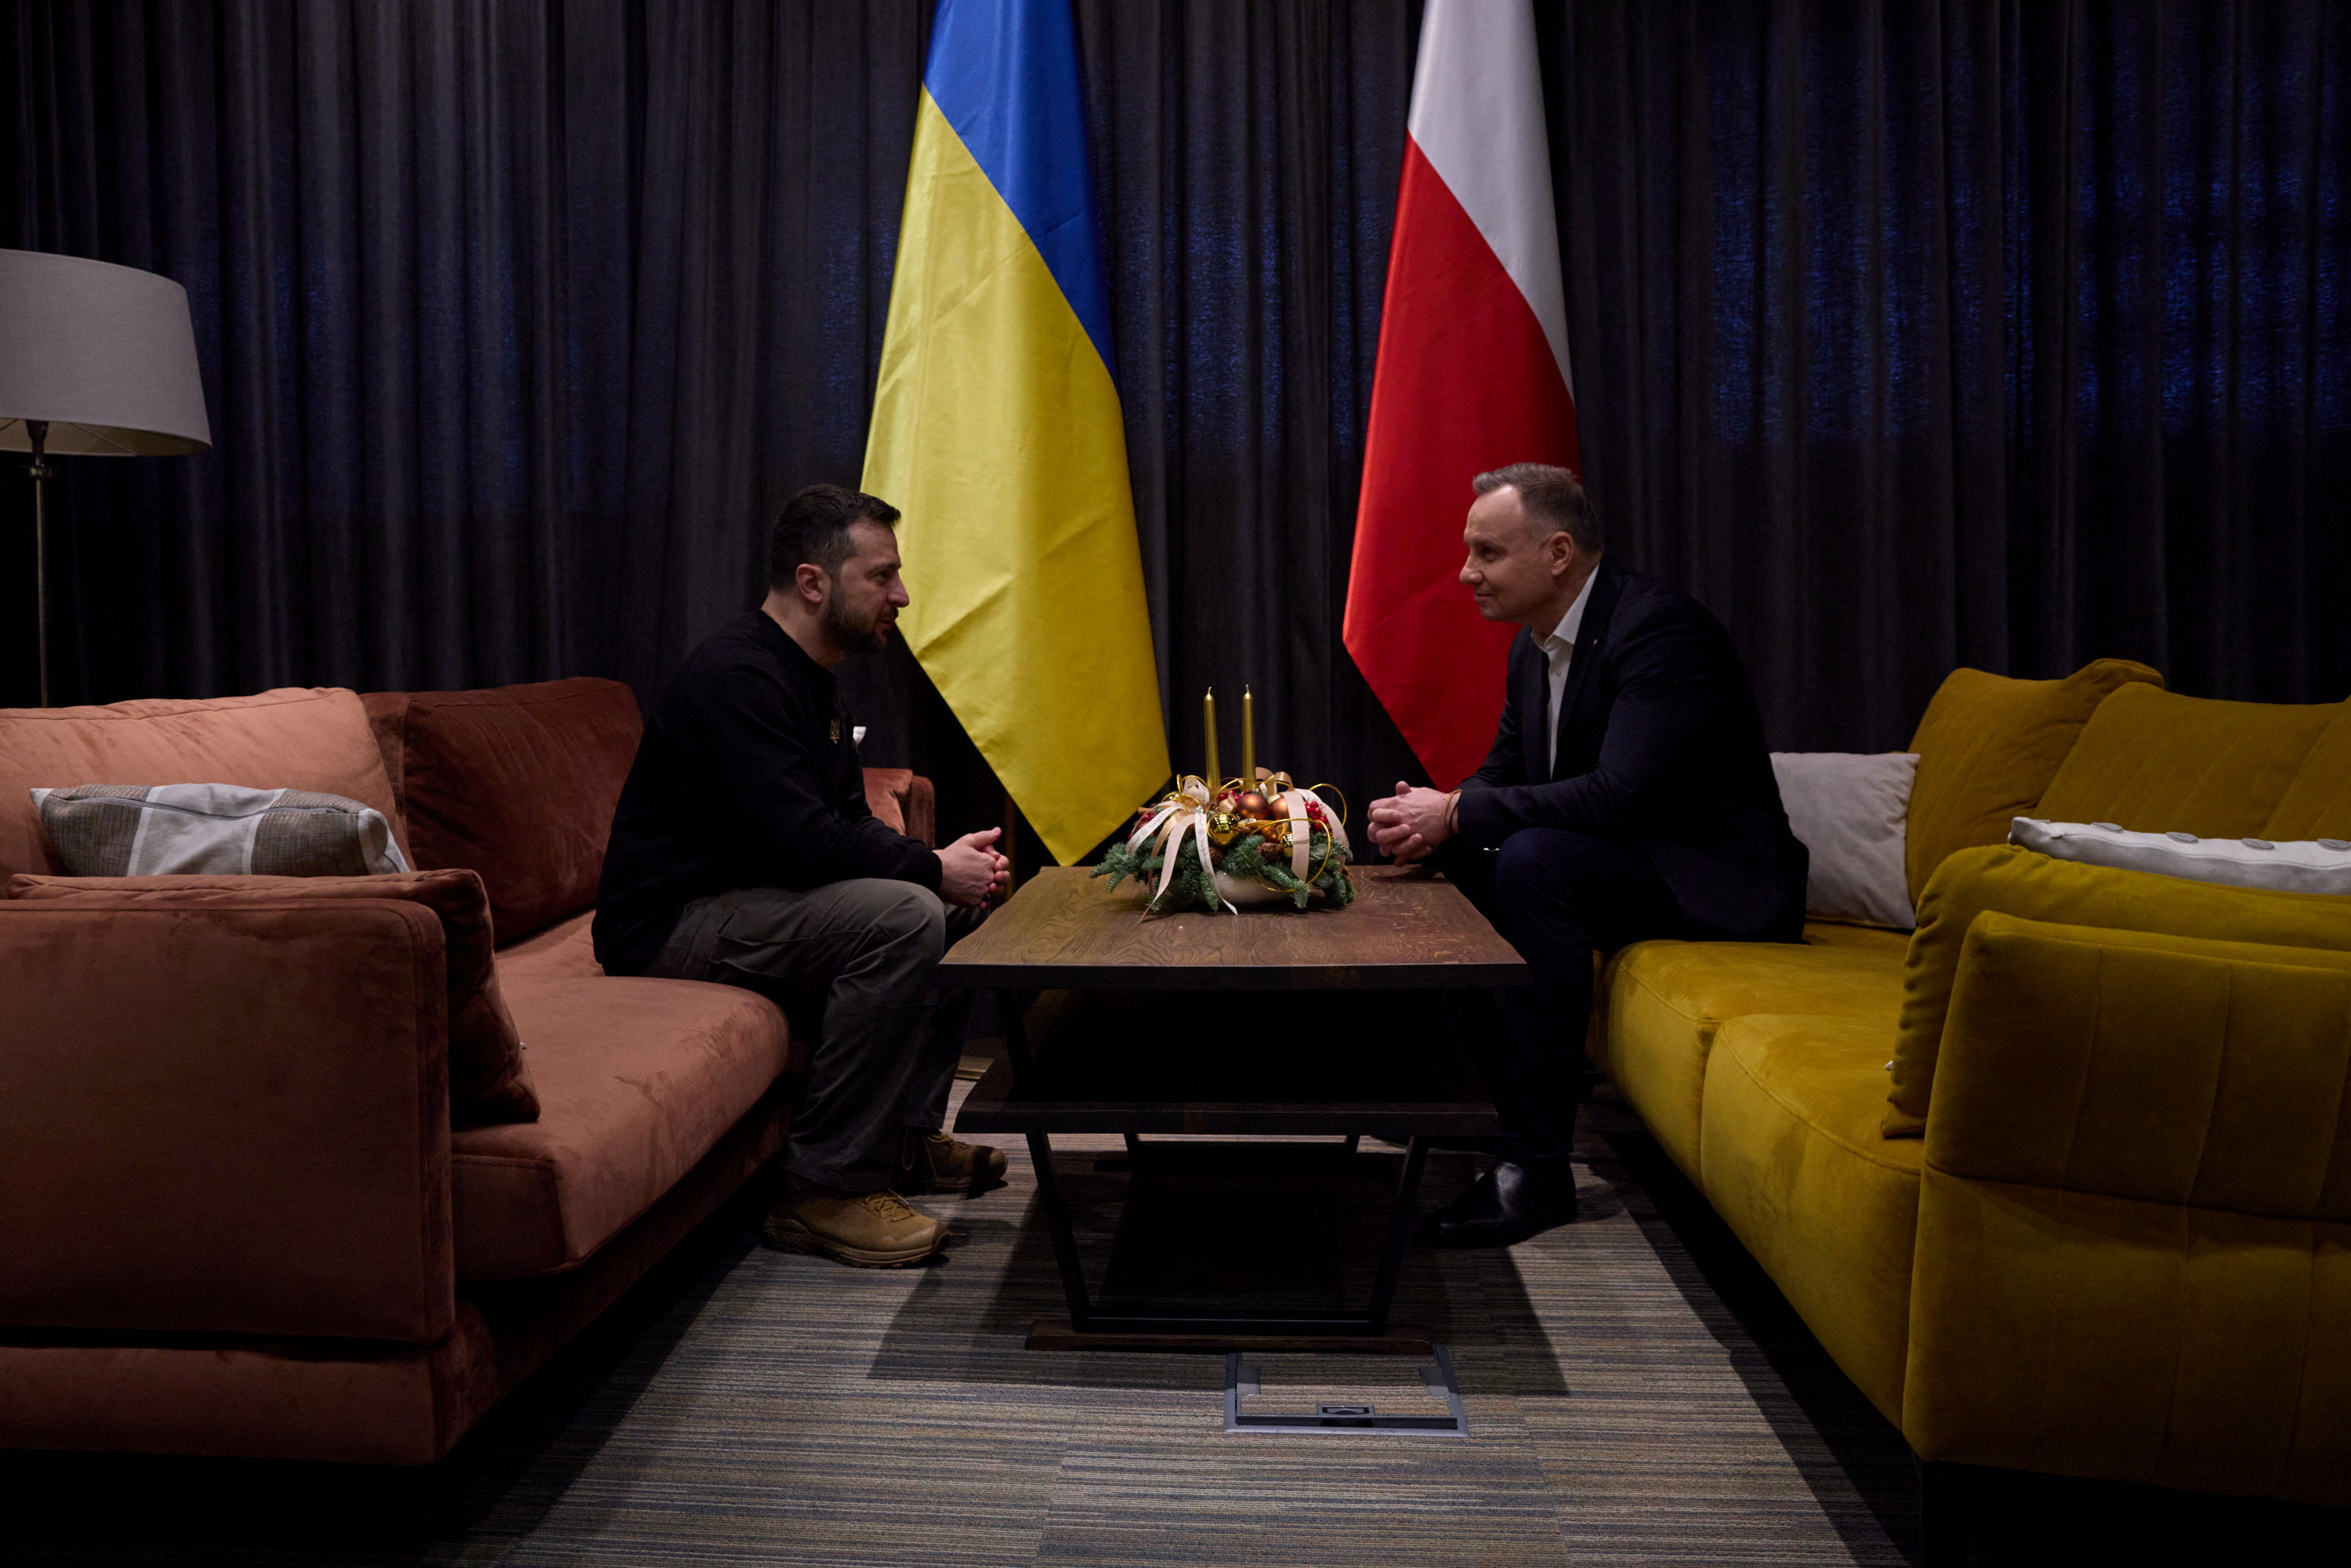 Ukrainian President Volodymyr Zelensky attends a meeting with Polish President Andrzej Dudain in Rzeszow, Poland on Thursday.